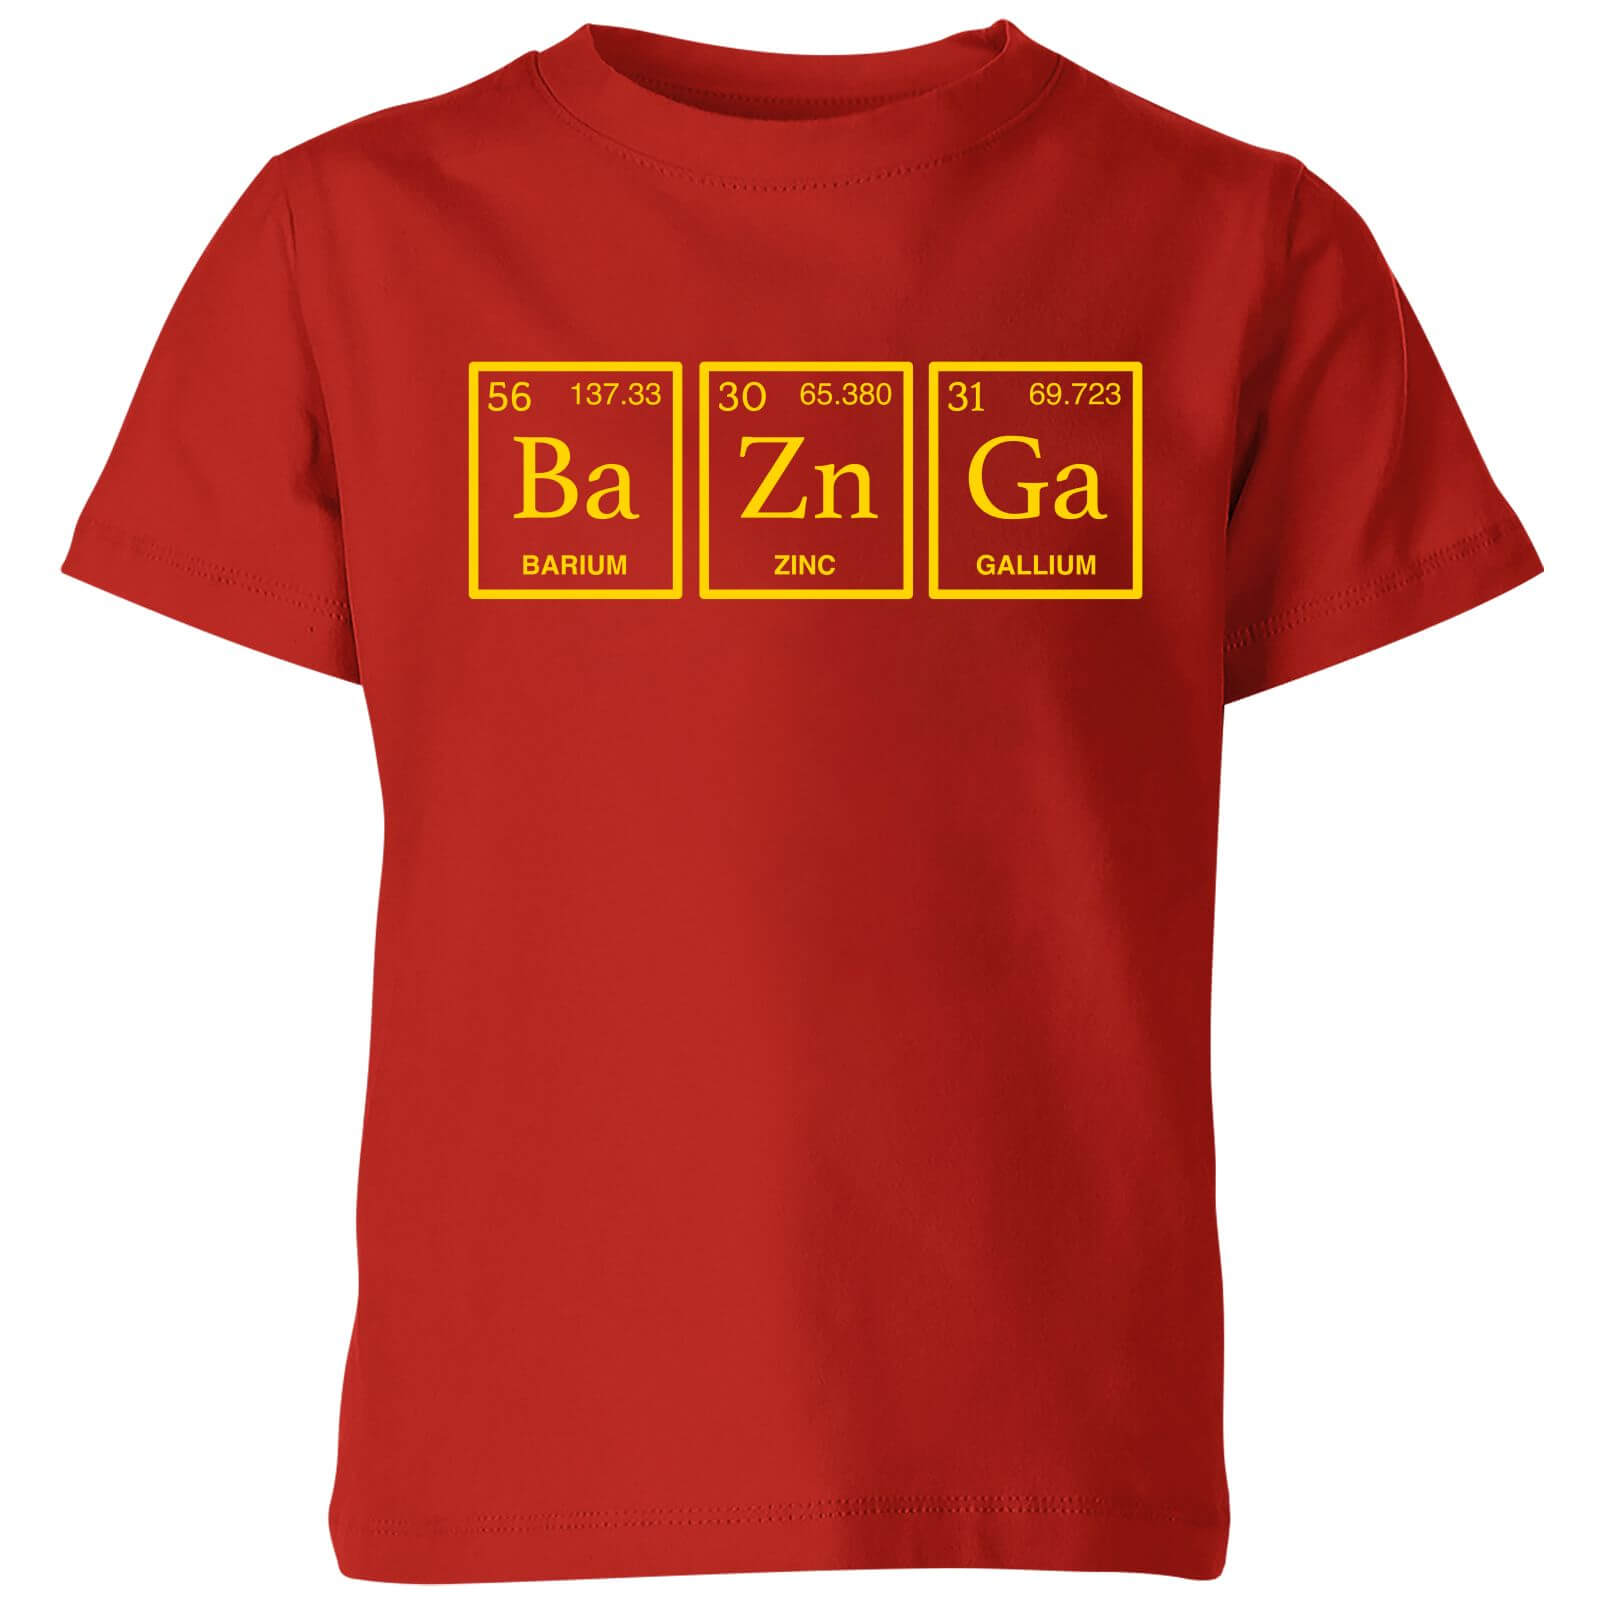 Ba Zn Ga Kids' T-Shirt - Red - 3-4 Years - Red